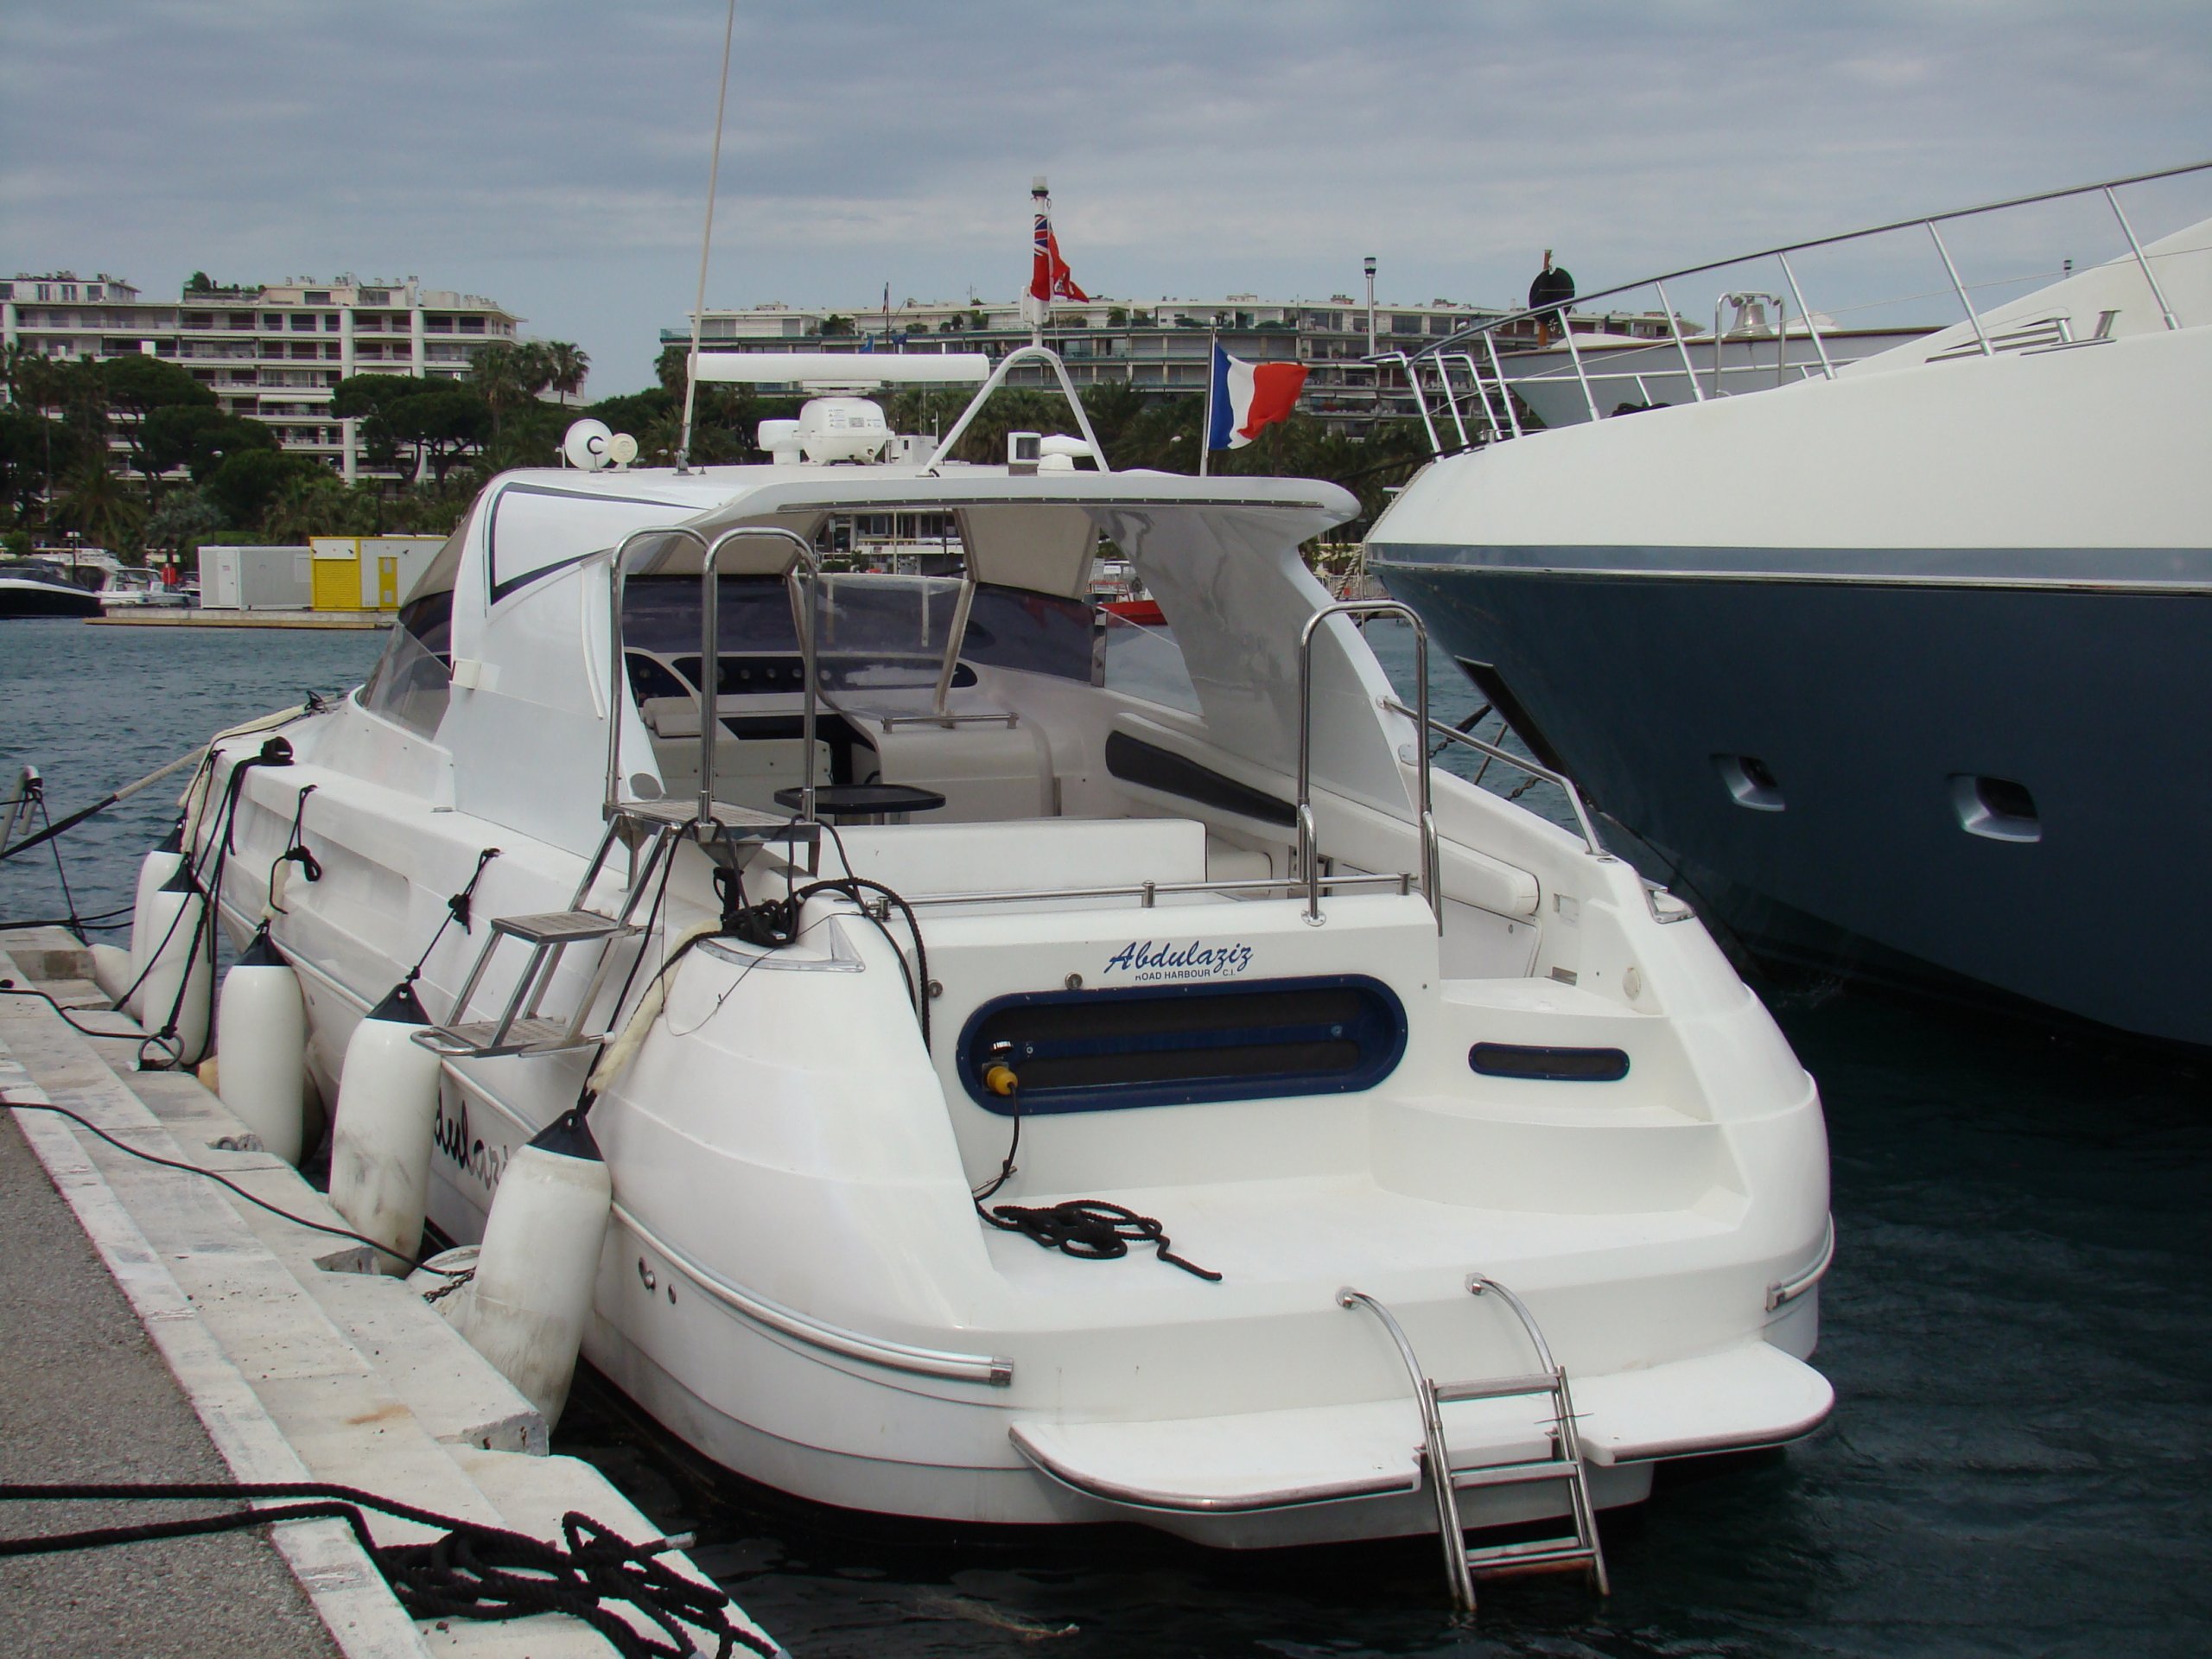 Tender to Montkaj yacht Abdulaziz